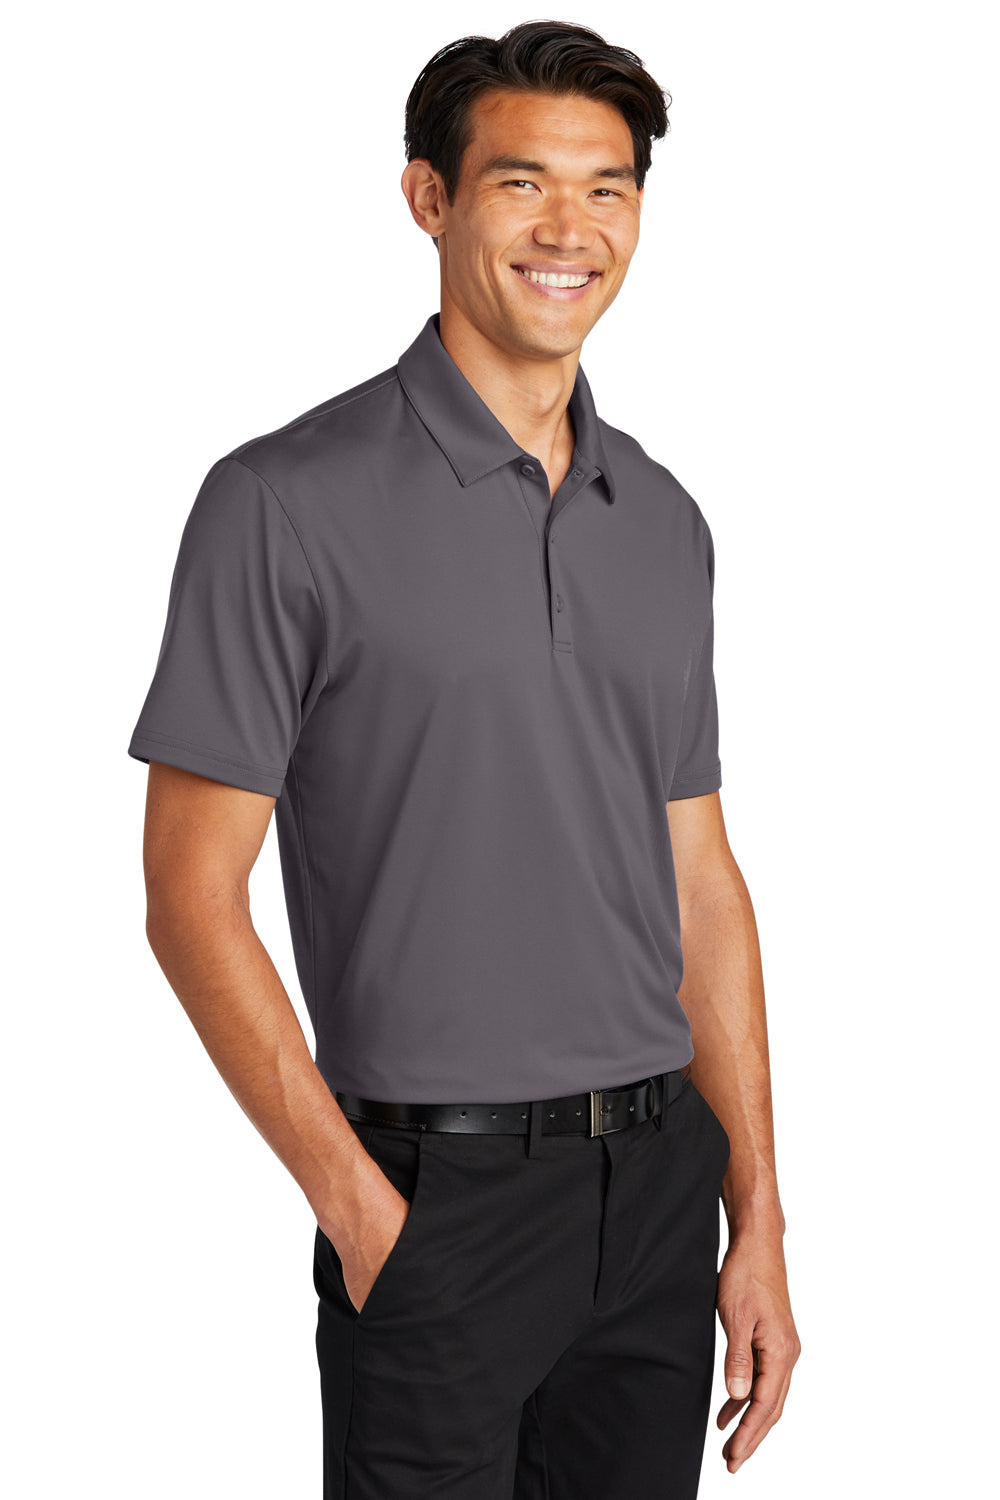 Port Authority K398 Staff Performance Short Sleeve Polo Shirt Graphite Grey 3Q